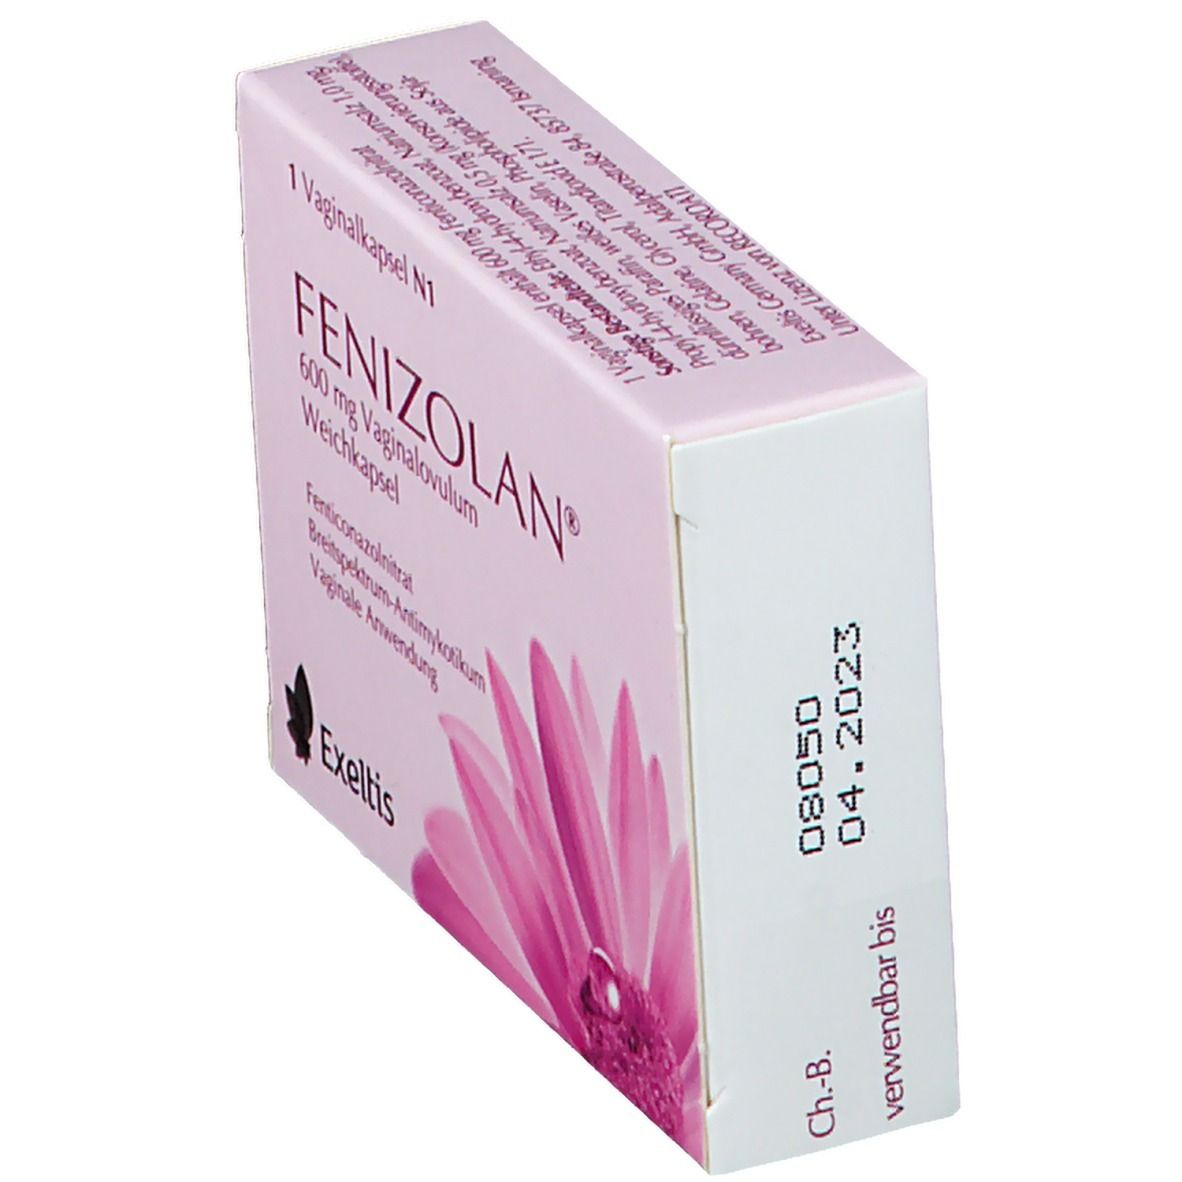 Fenizolan® Vaginalovulum